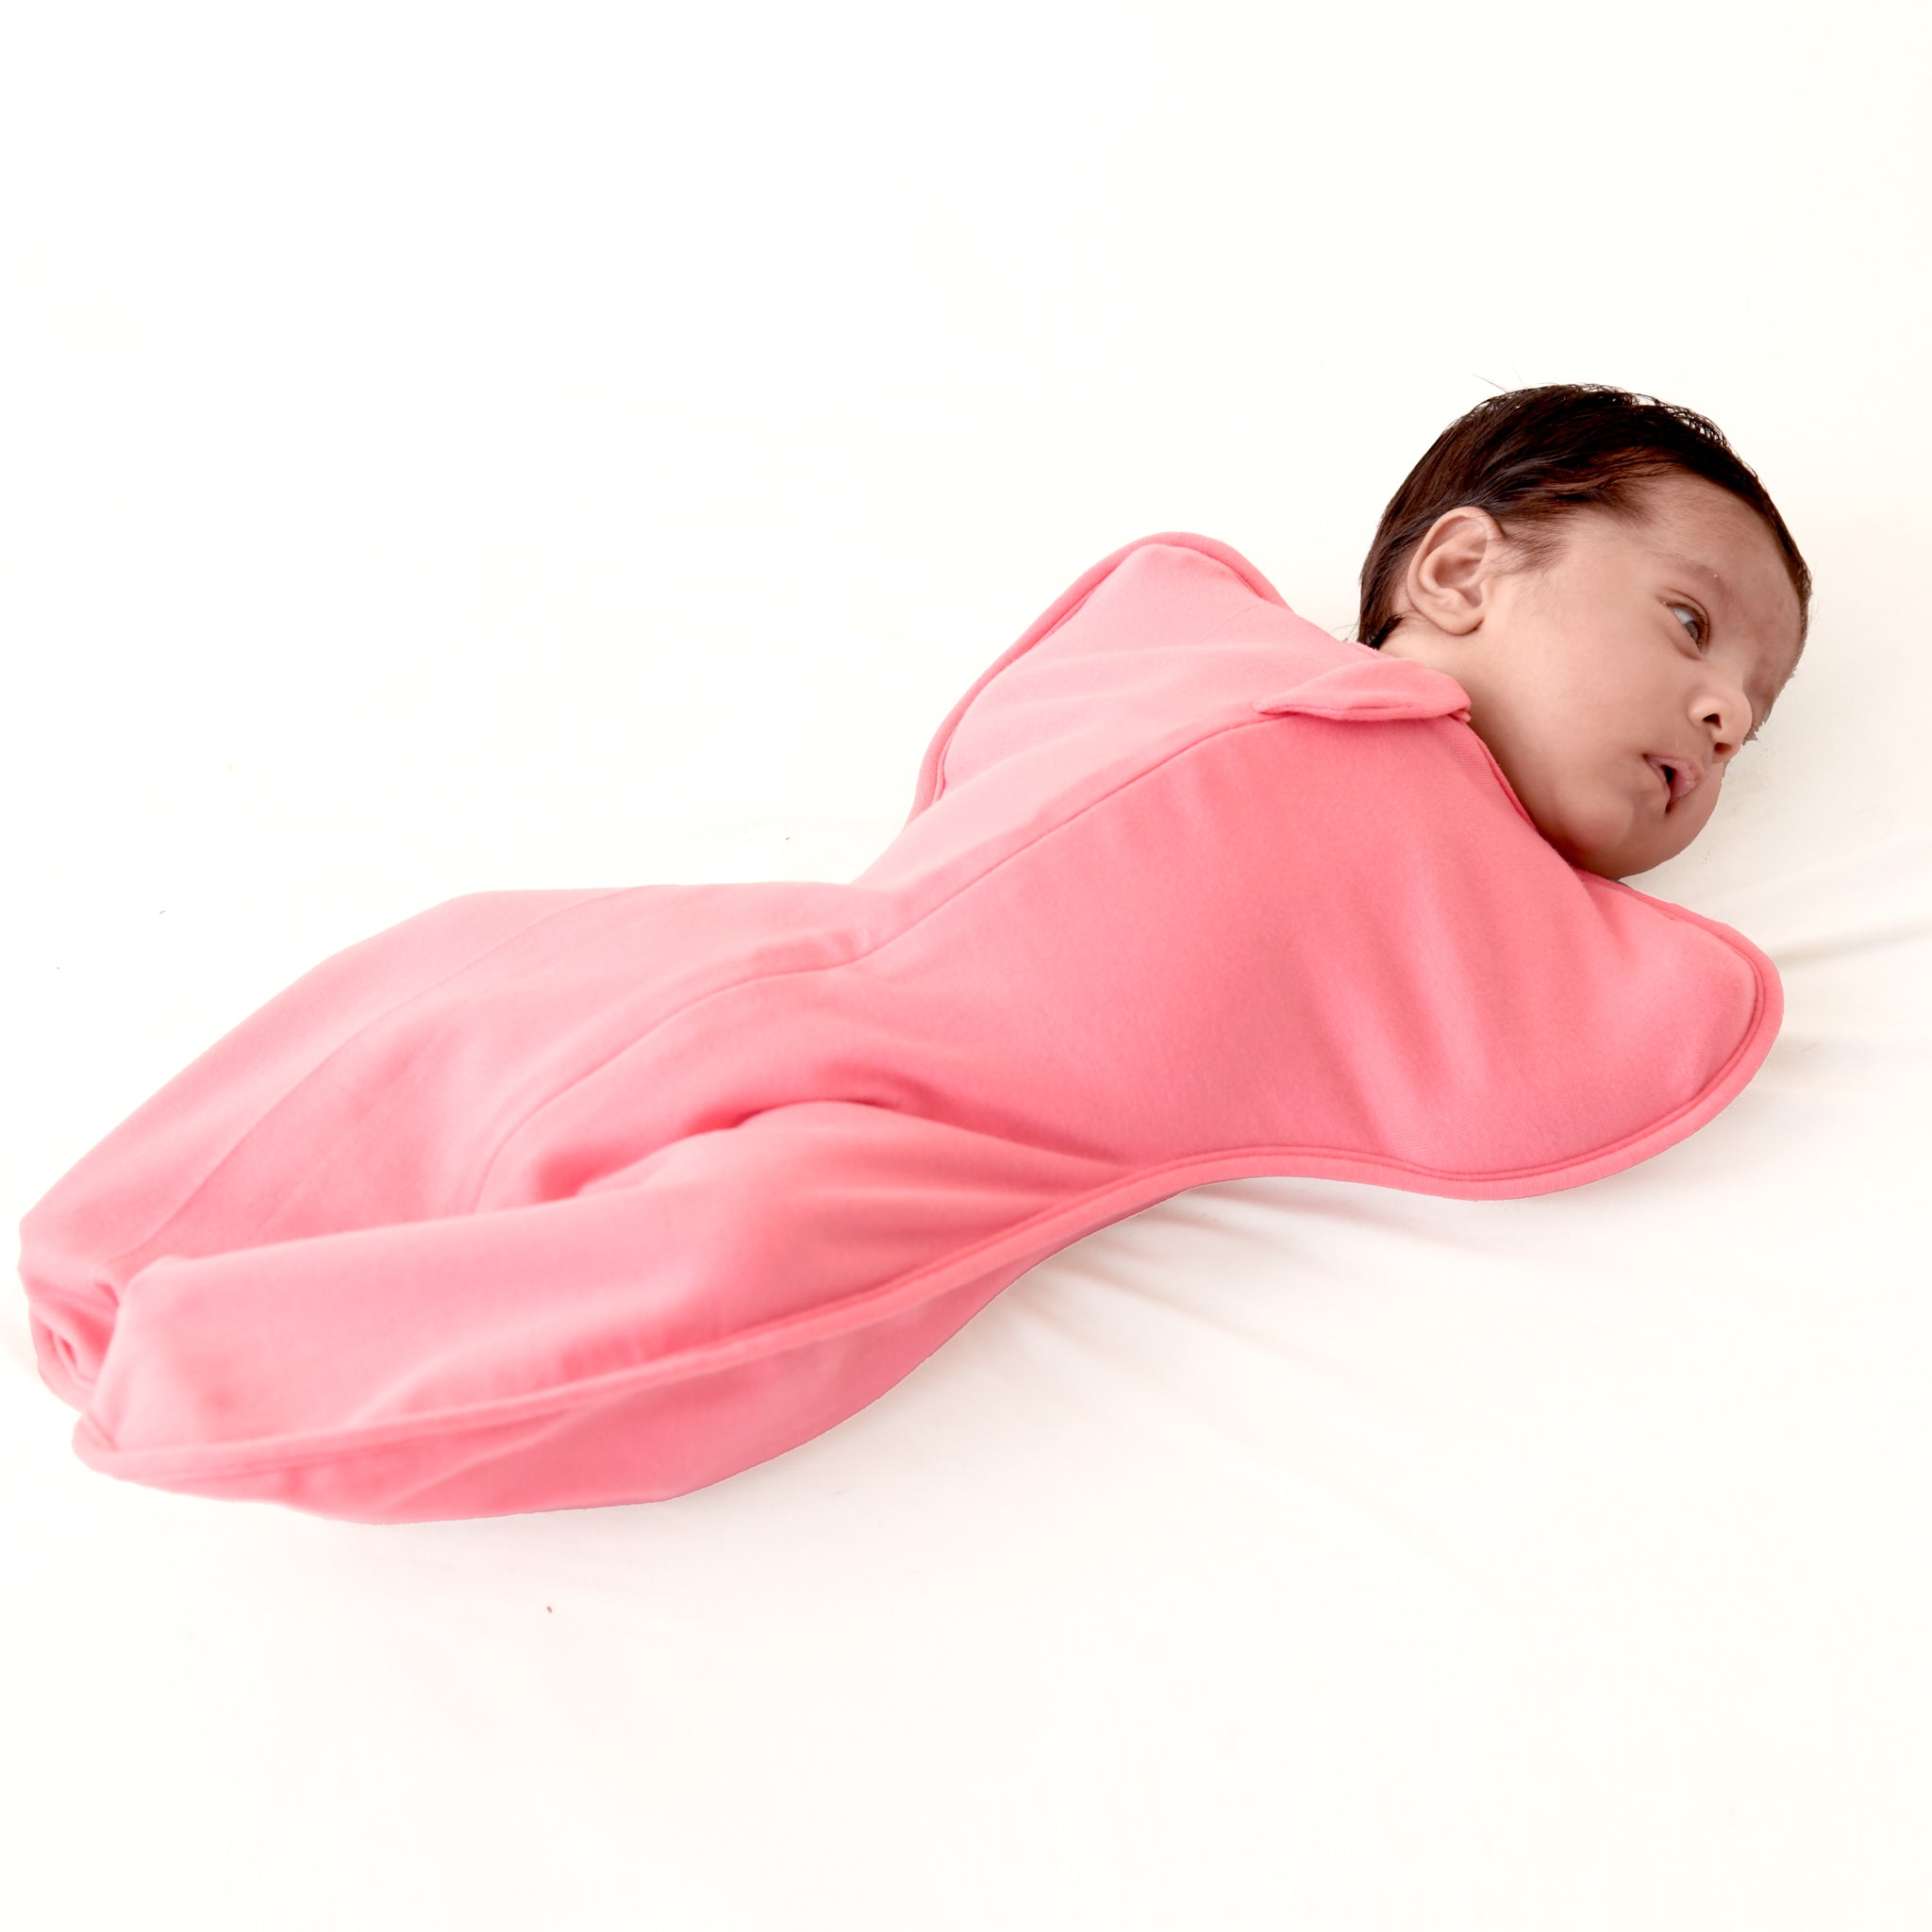 DESSERT ROSE SLEEPING POD SWADDLE FOR BABIES